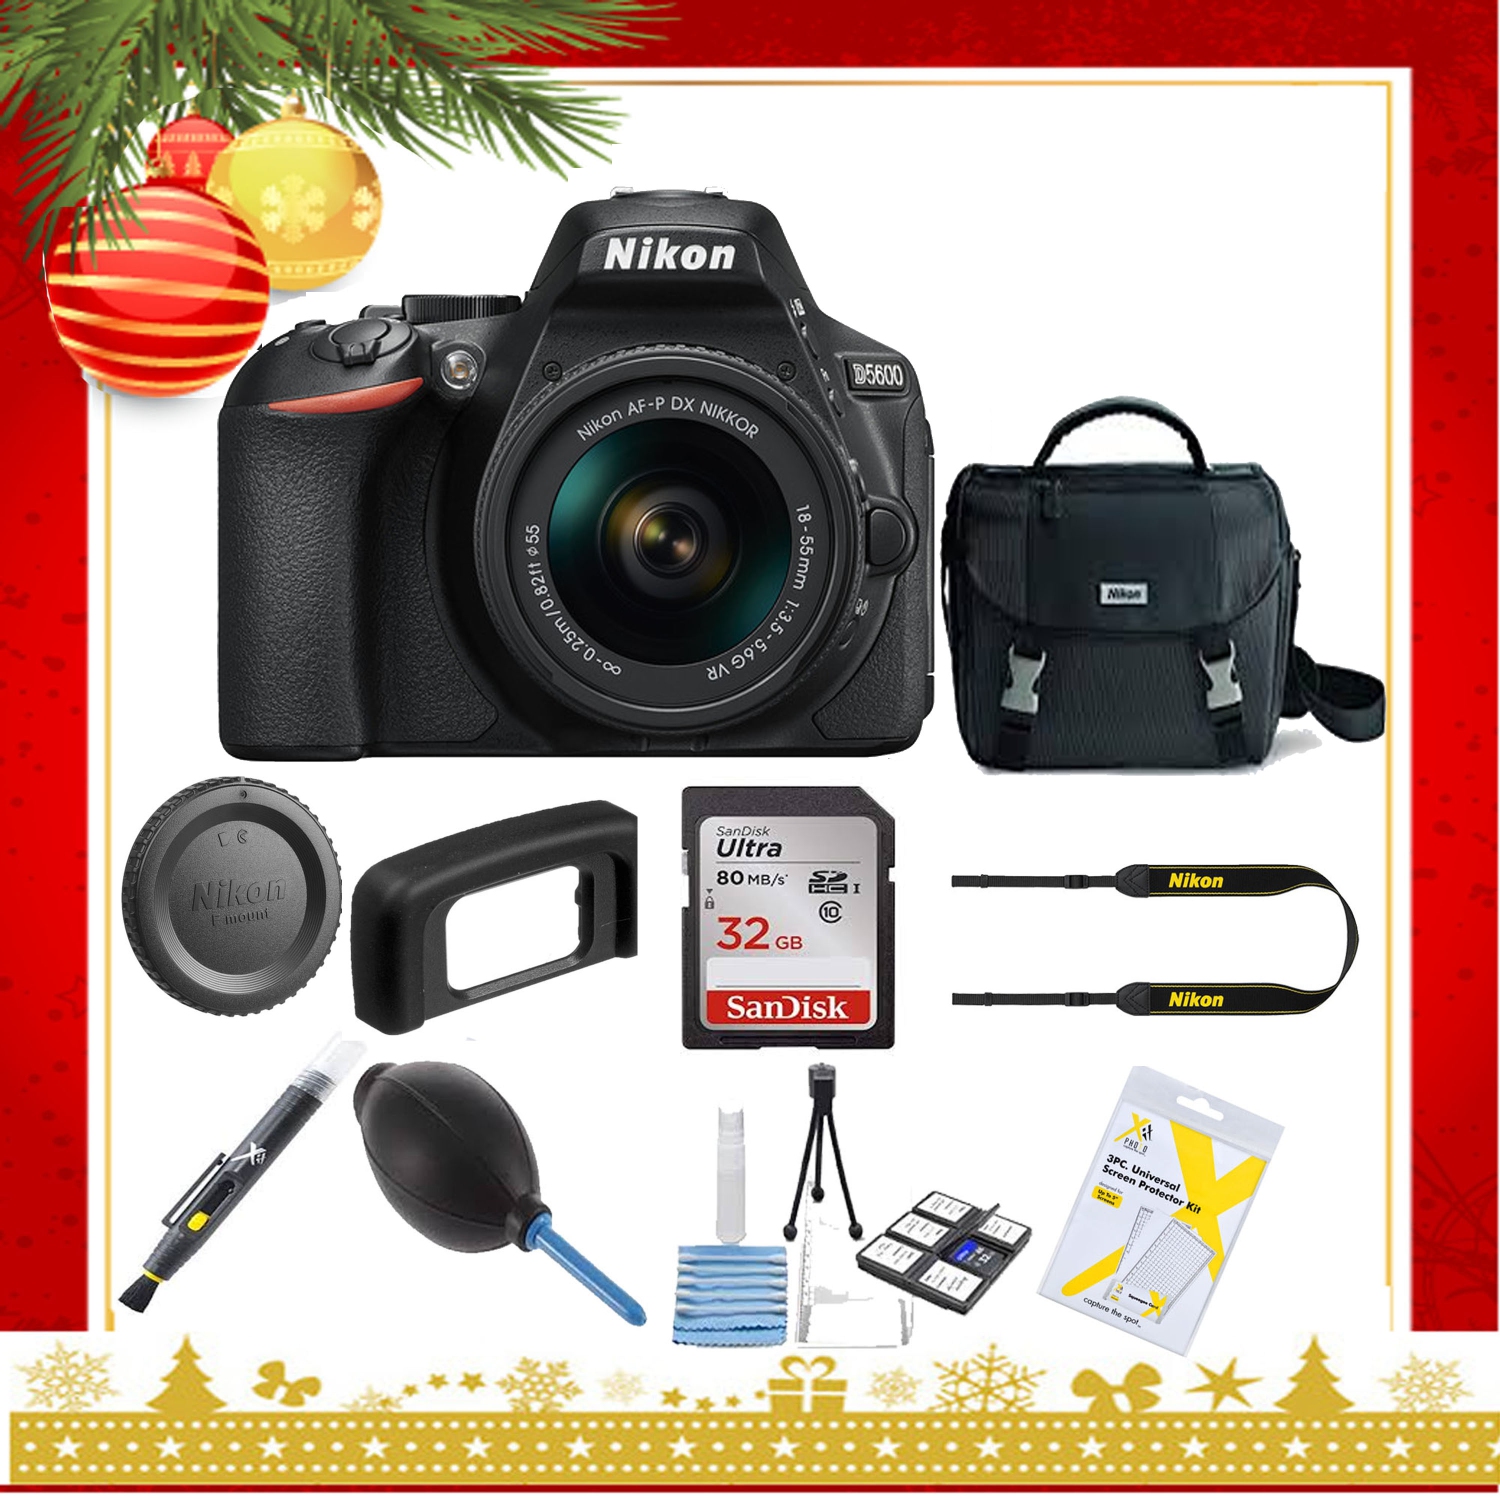 Nikon D5600 DSLR Camera with 18-55mm Lens (Black) |Nikon Case | Sandisk 32GB Memory Card |Cleaning Kit - Holiday Gift Special - US Version w/ Seller Warranty